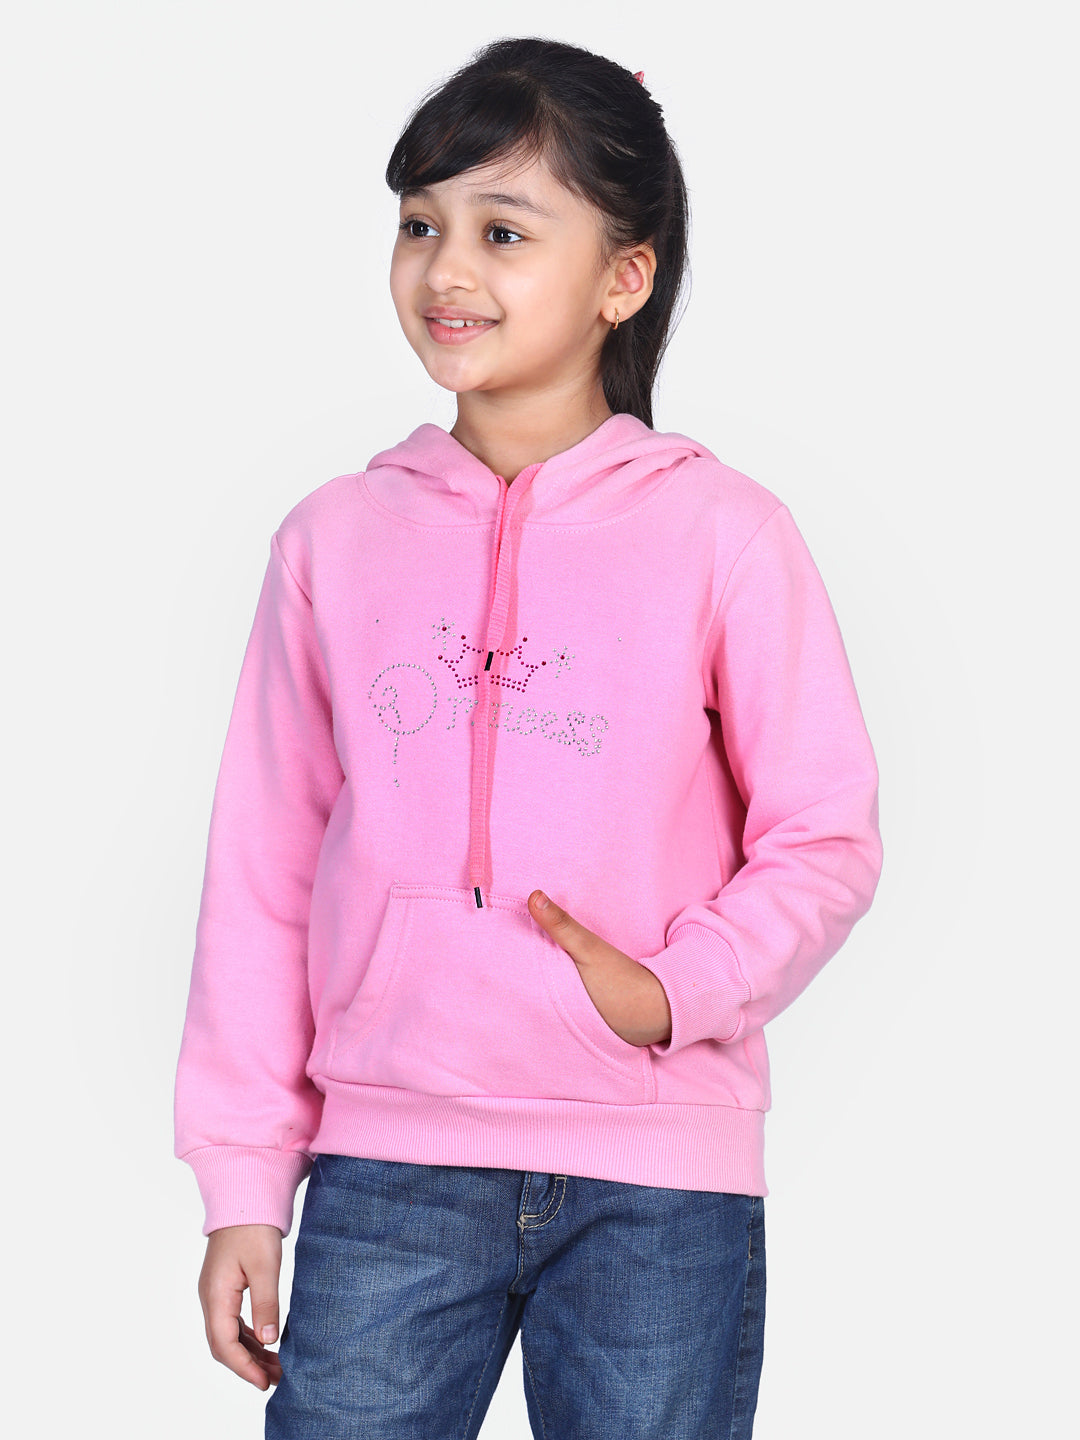 Pullover Ladies Maroon Printed Sweatshirt at Rs 210/piece in New Delhi |  ID: 2852904450088